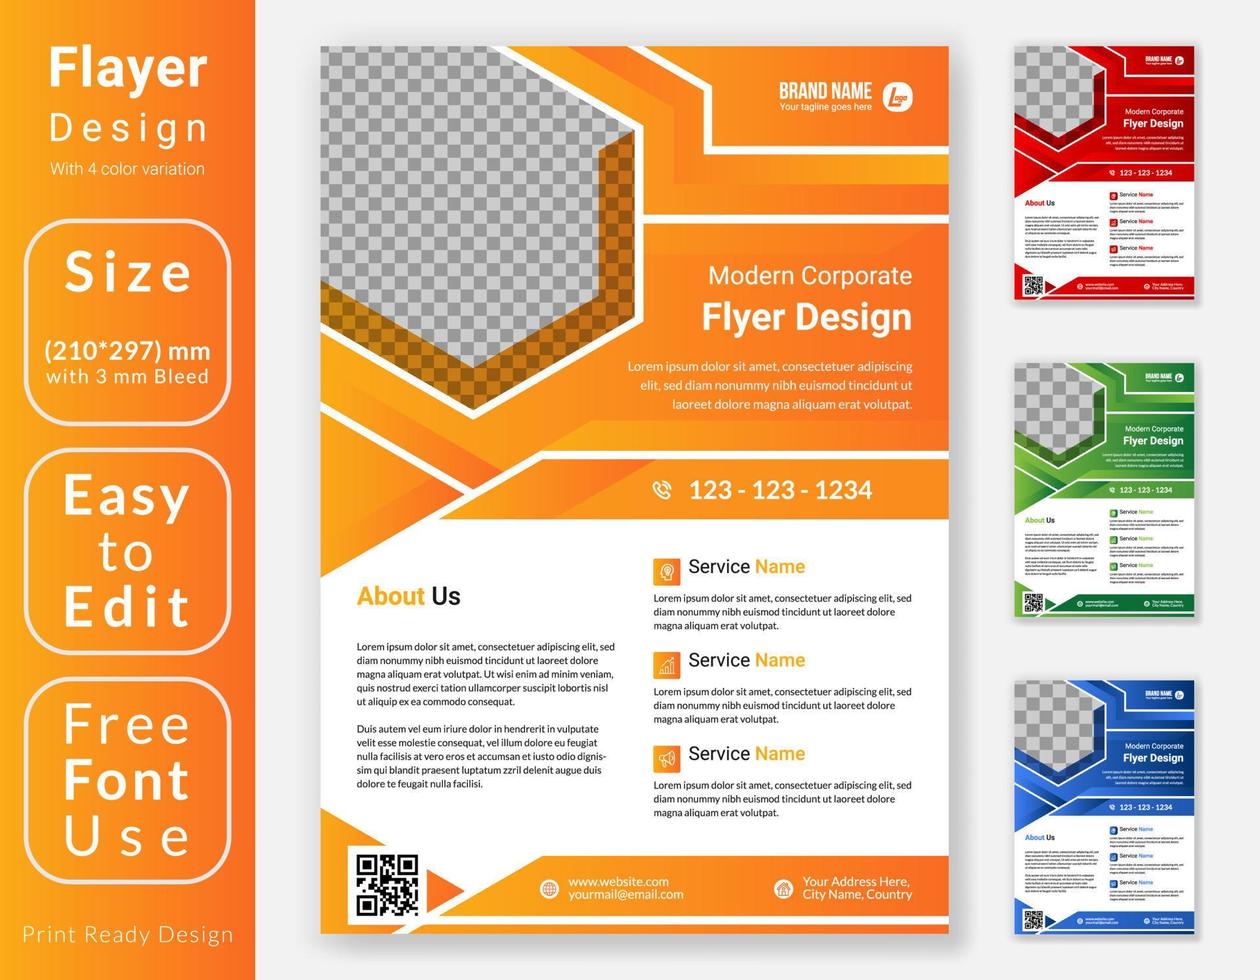 kreatives modernes Business-Flyer-Template-Design. A4 Corporate Flyer Design mit vier Farbvariationen. vektor